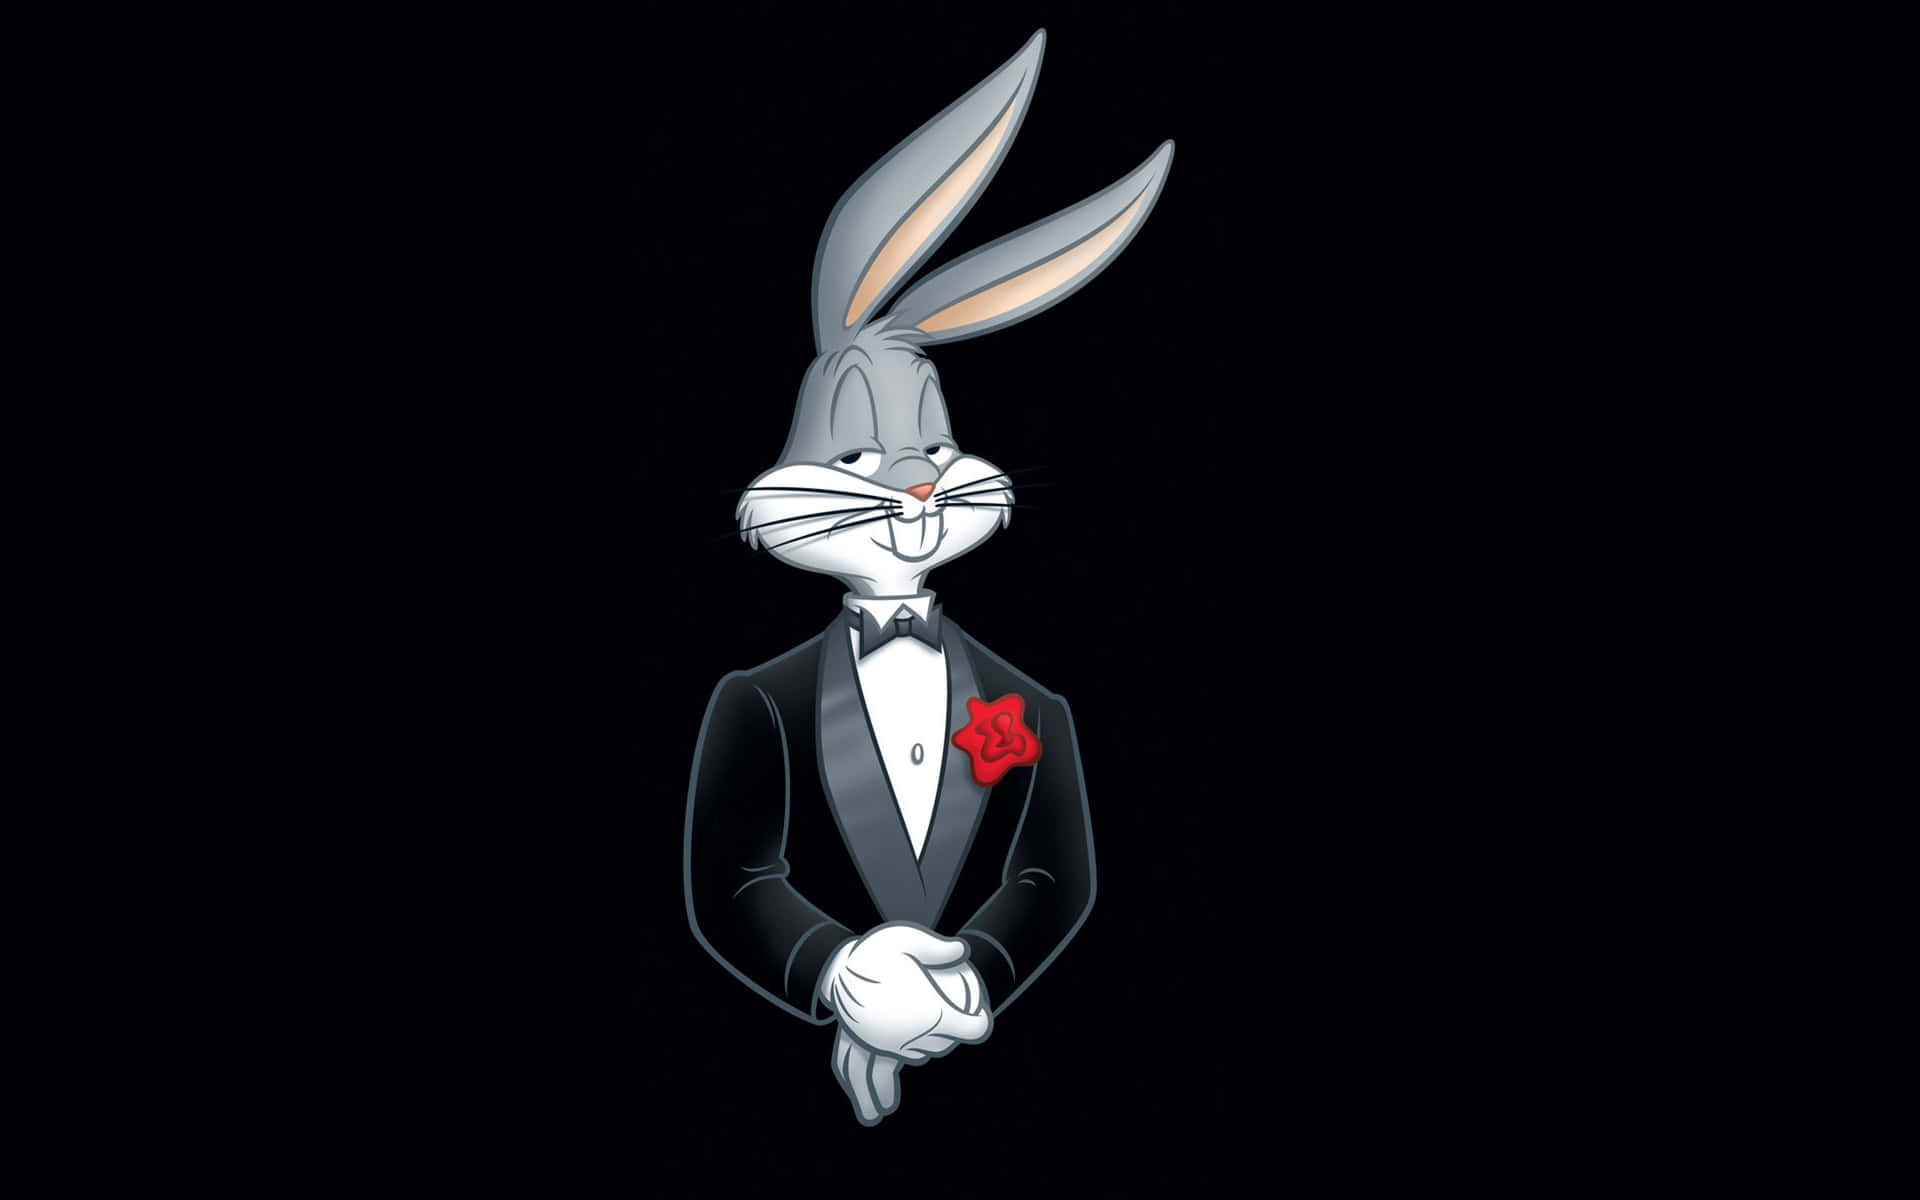 Cool Bugs Bunny 3840 X 2400 Wallpaper